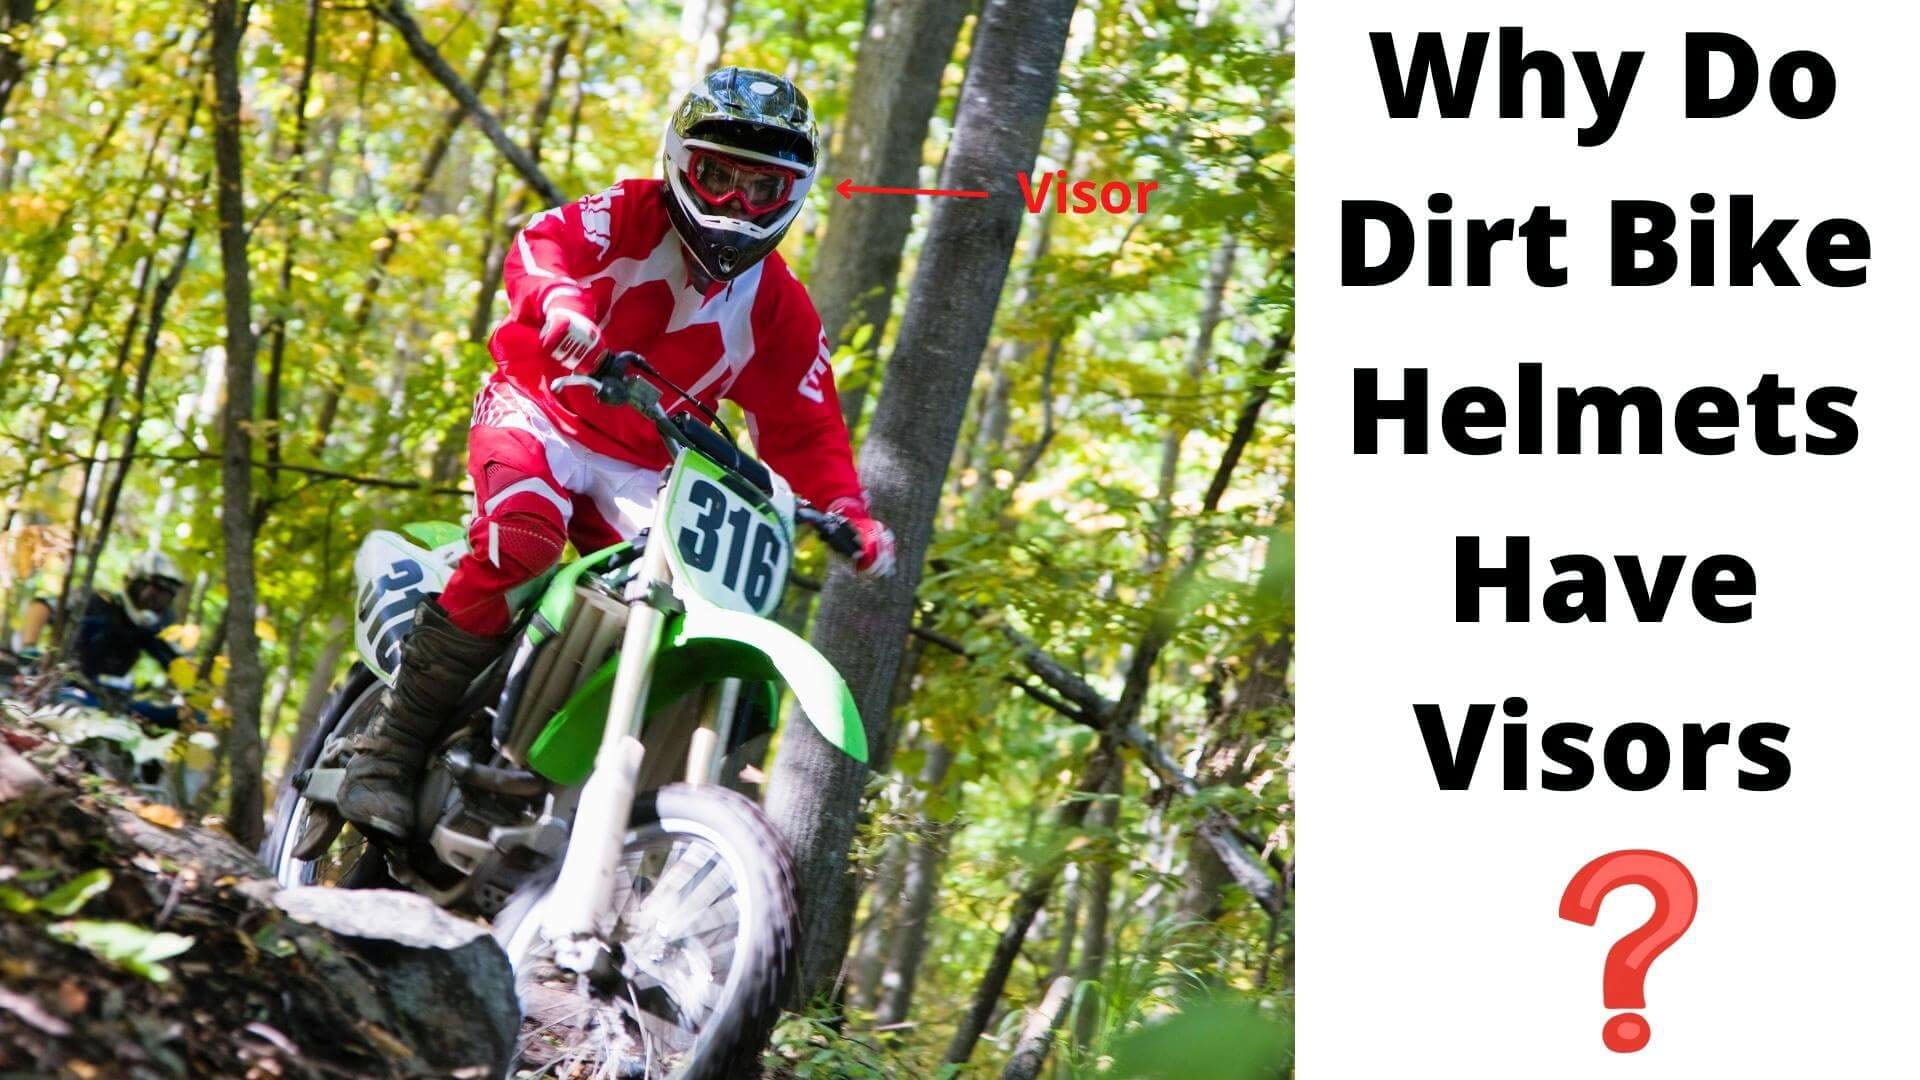 Why do Dirt Bike Helmets Have Visors? Advantages Explained!